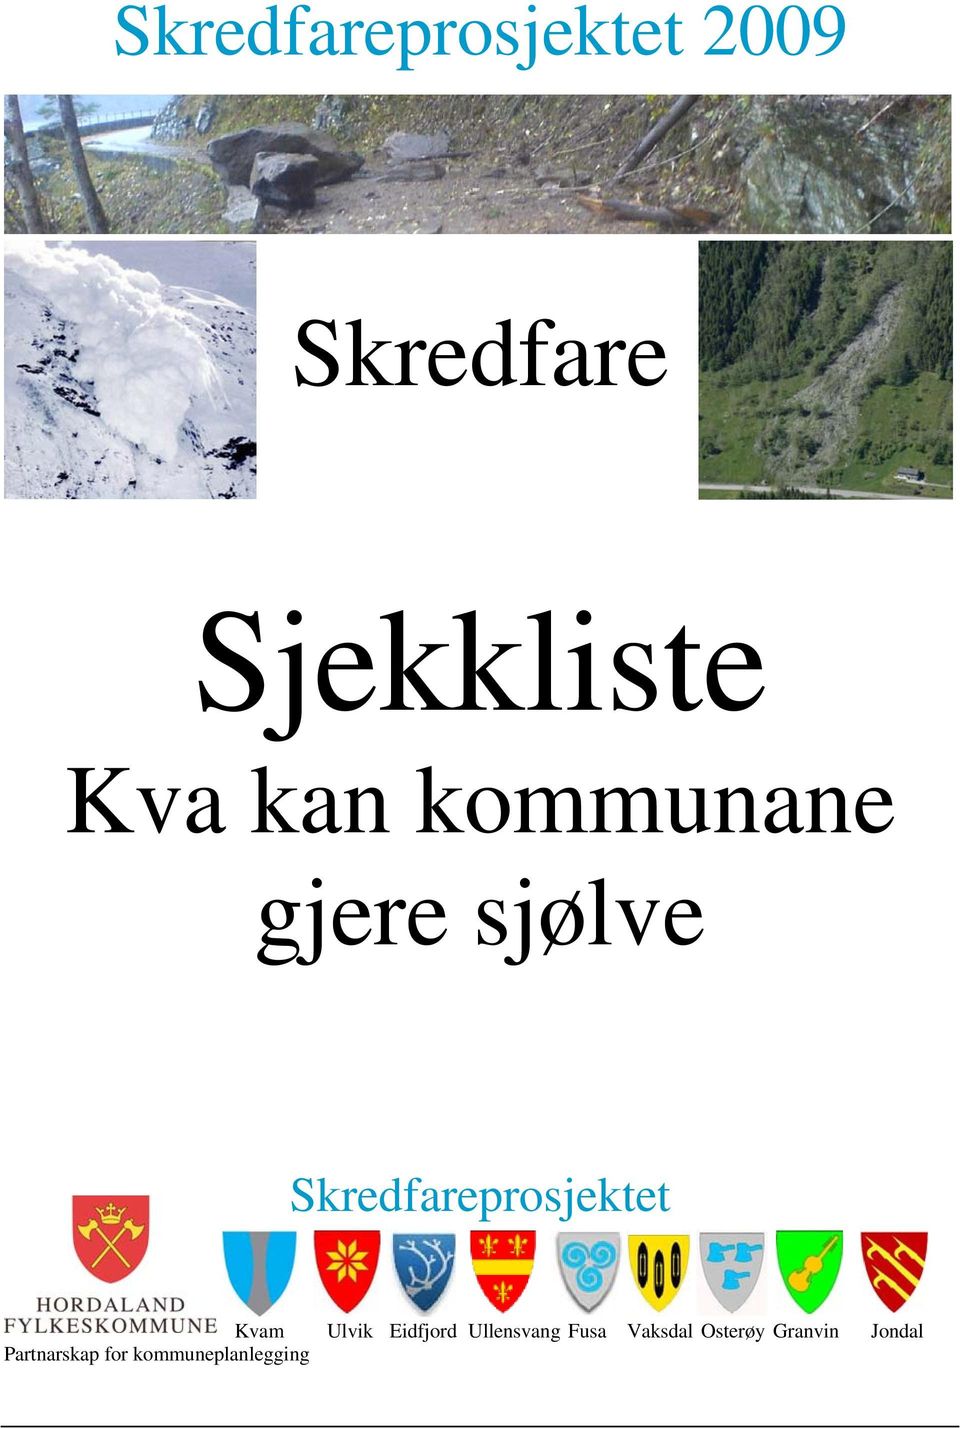 Eidfjord Ullensvang Fusa Vaksdal Osterøy